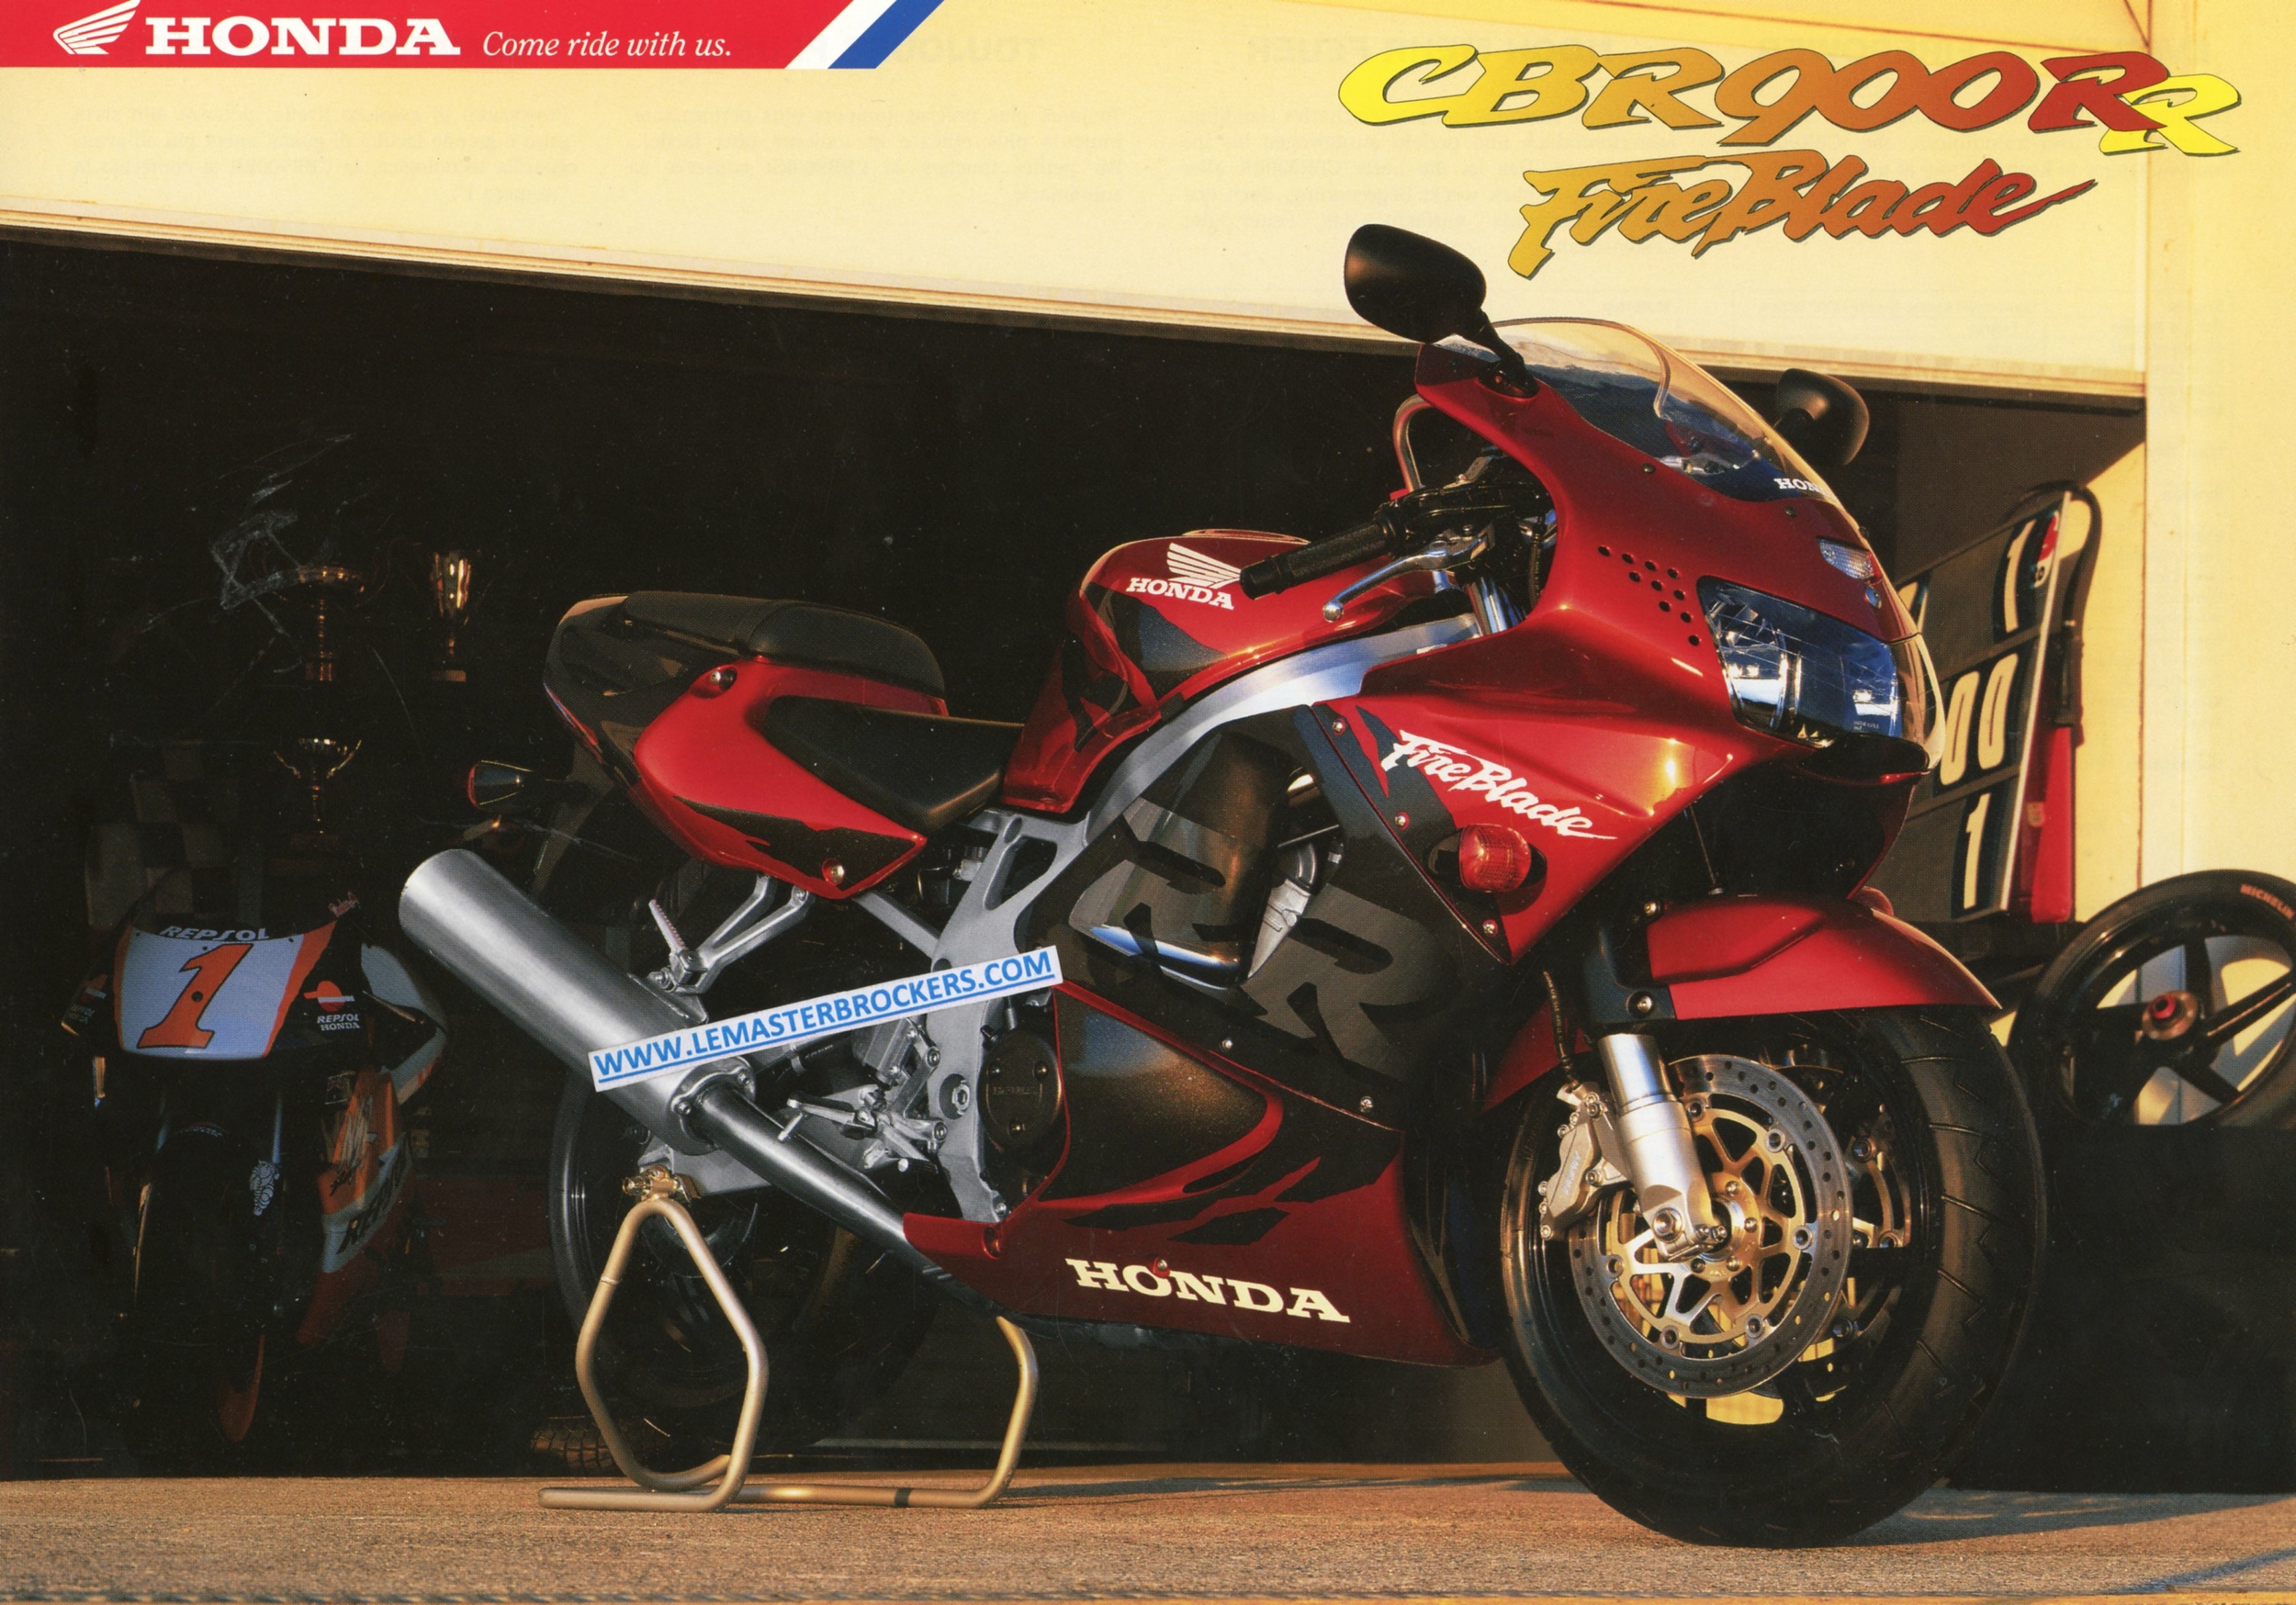 PROSPECTUS-MOTO-HONDA-CBR-FIREBLADE-CBR900RR-LEMASTERBROCKERS-1997-BROCHURE-MOTO